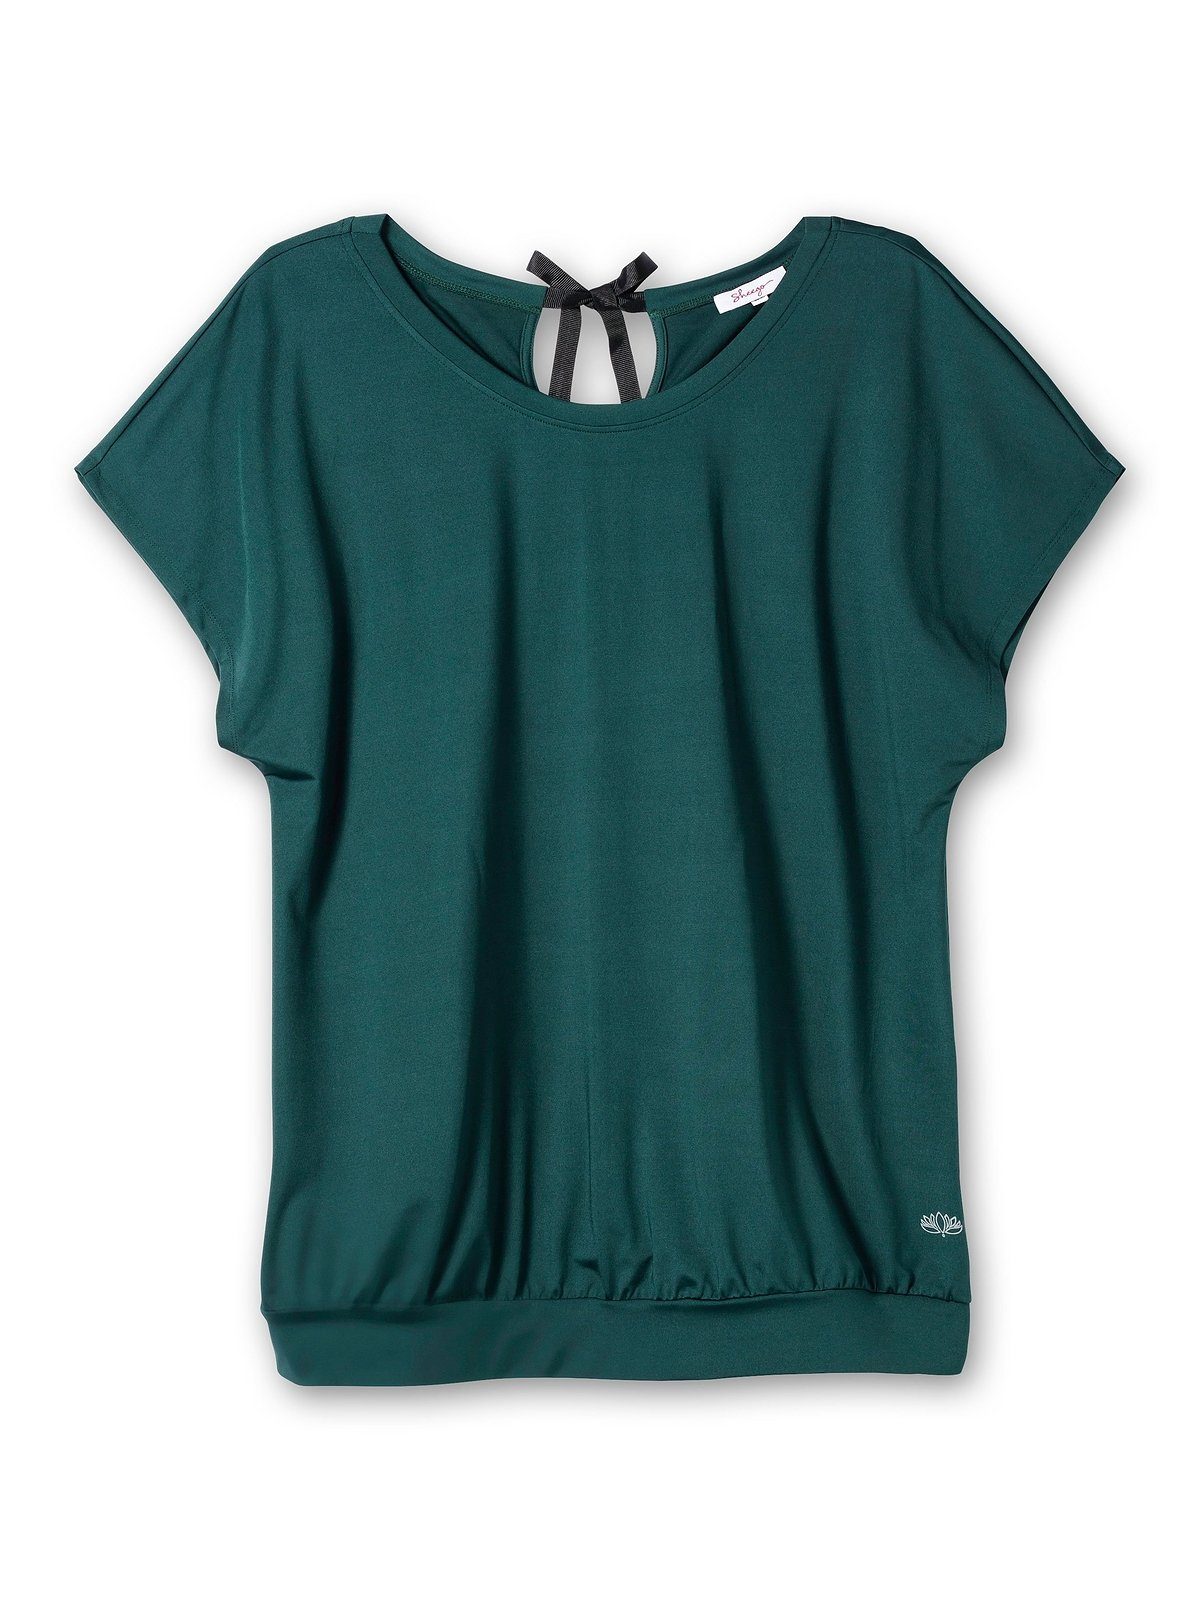 Sheego T-Shirt Große aus Funktionsmaterial tiefgrün Größen